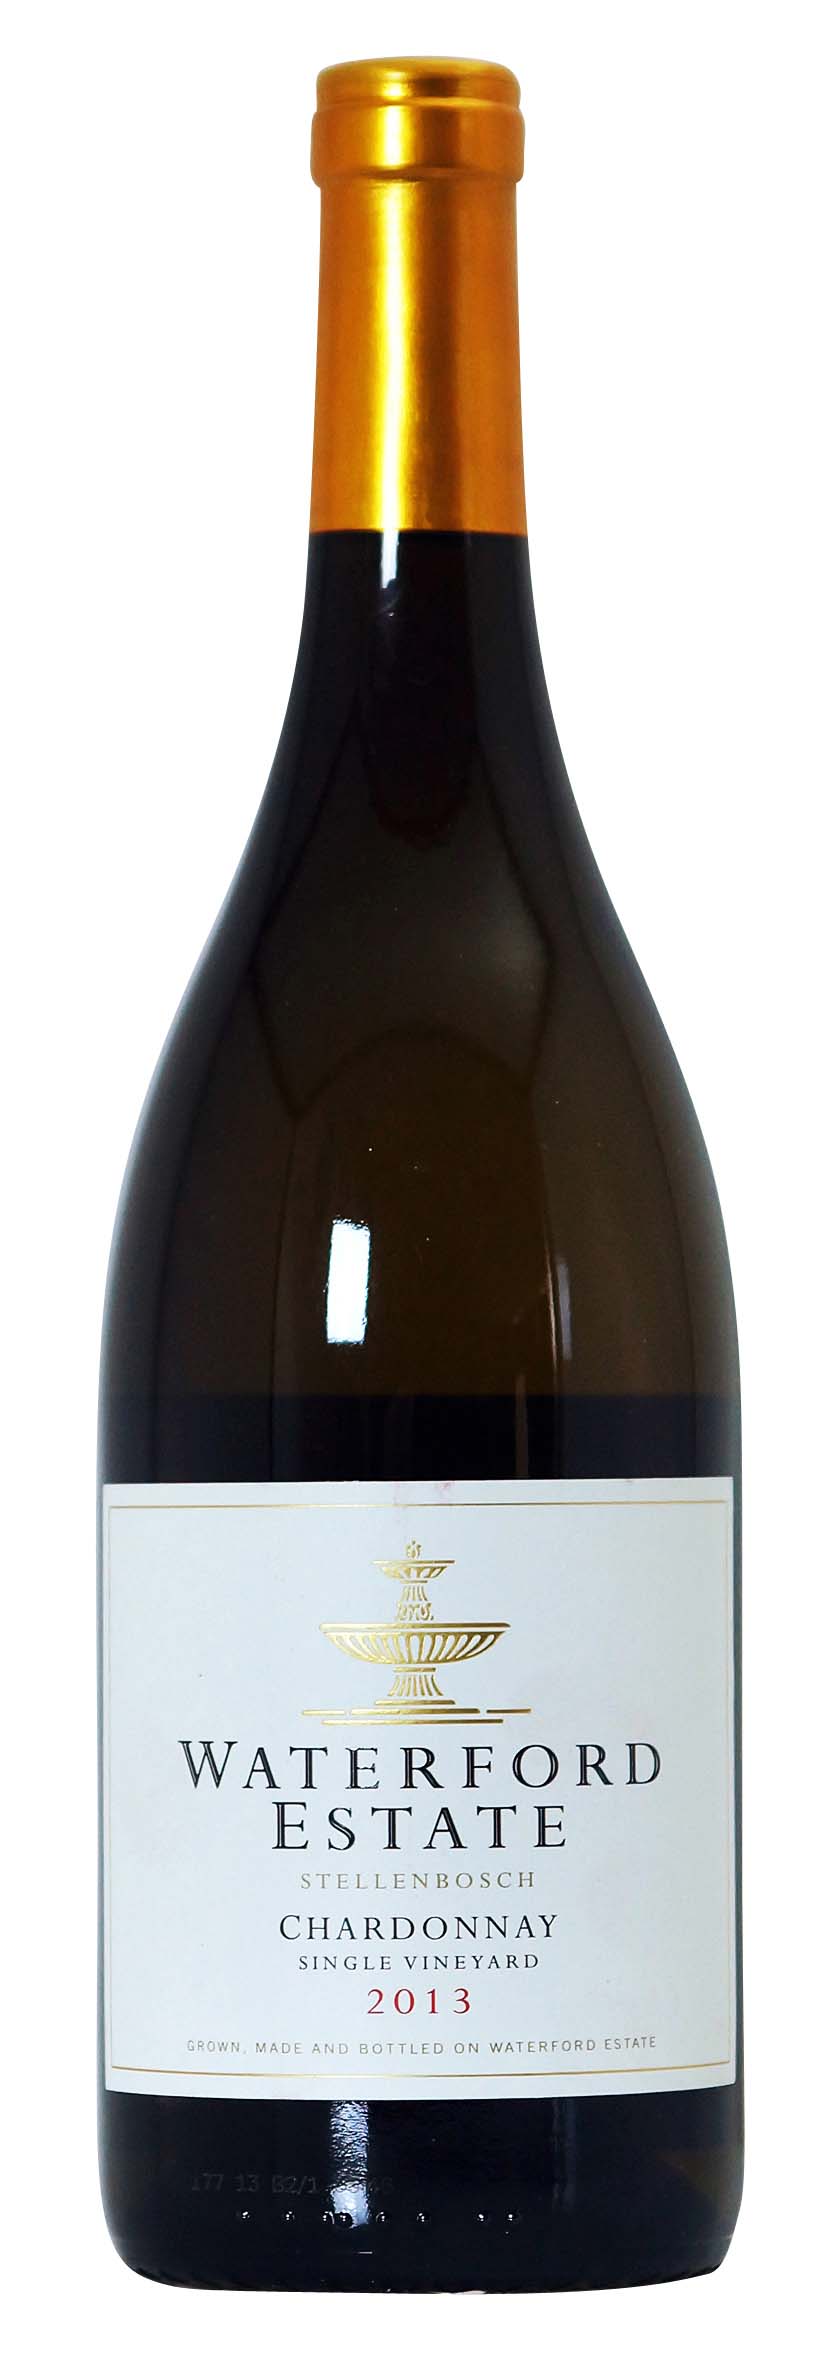 Waterford Estate Chardonnay 2013